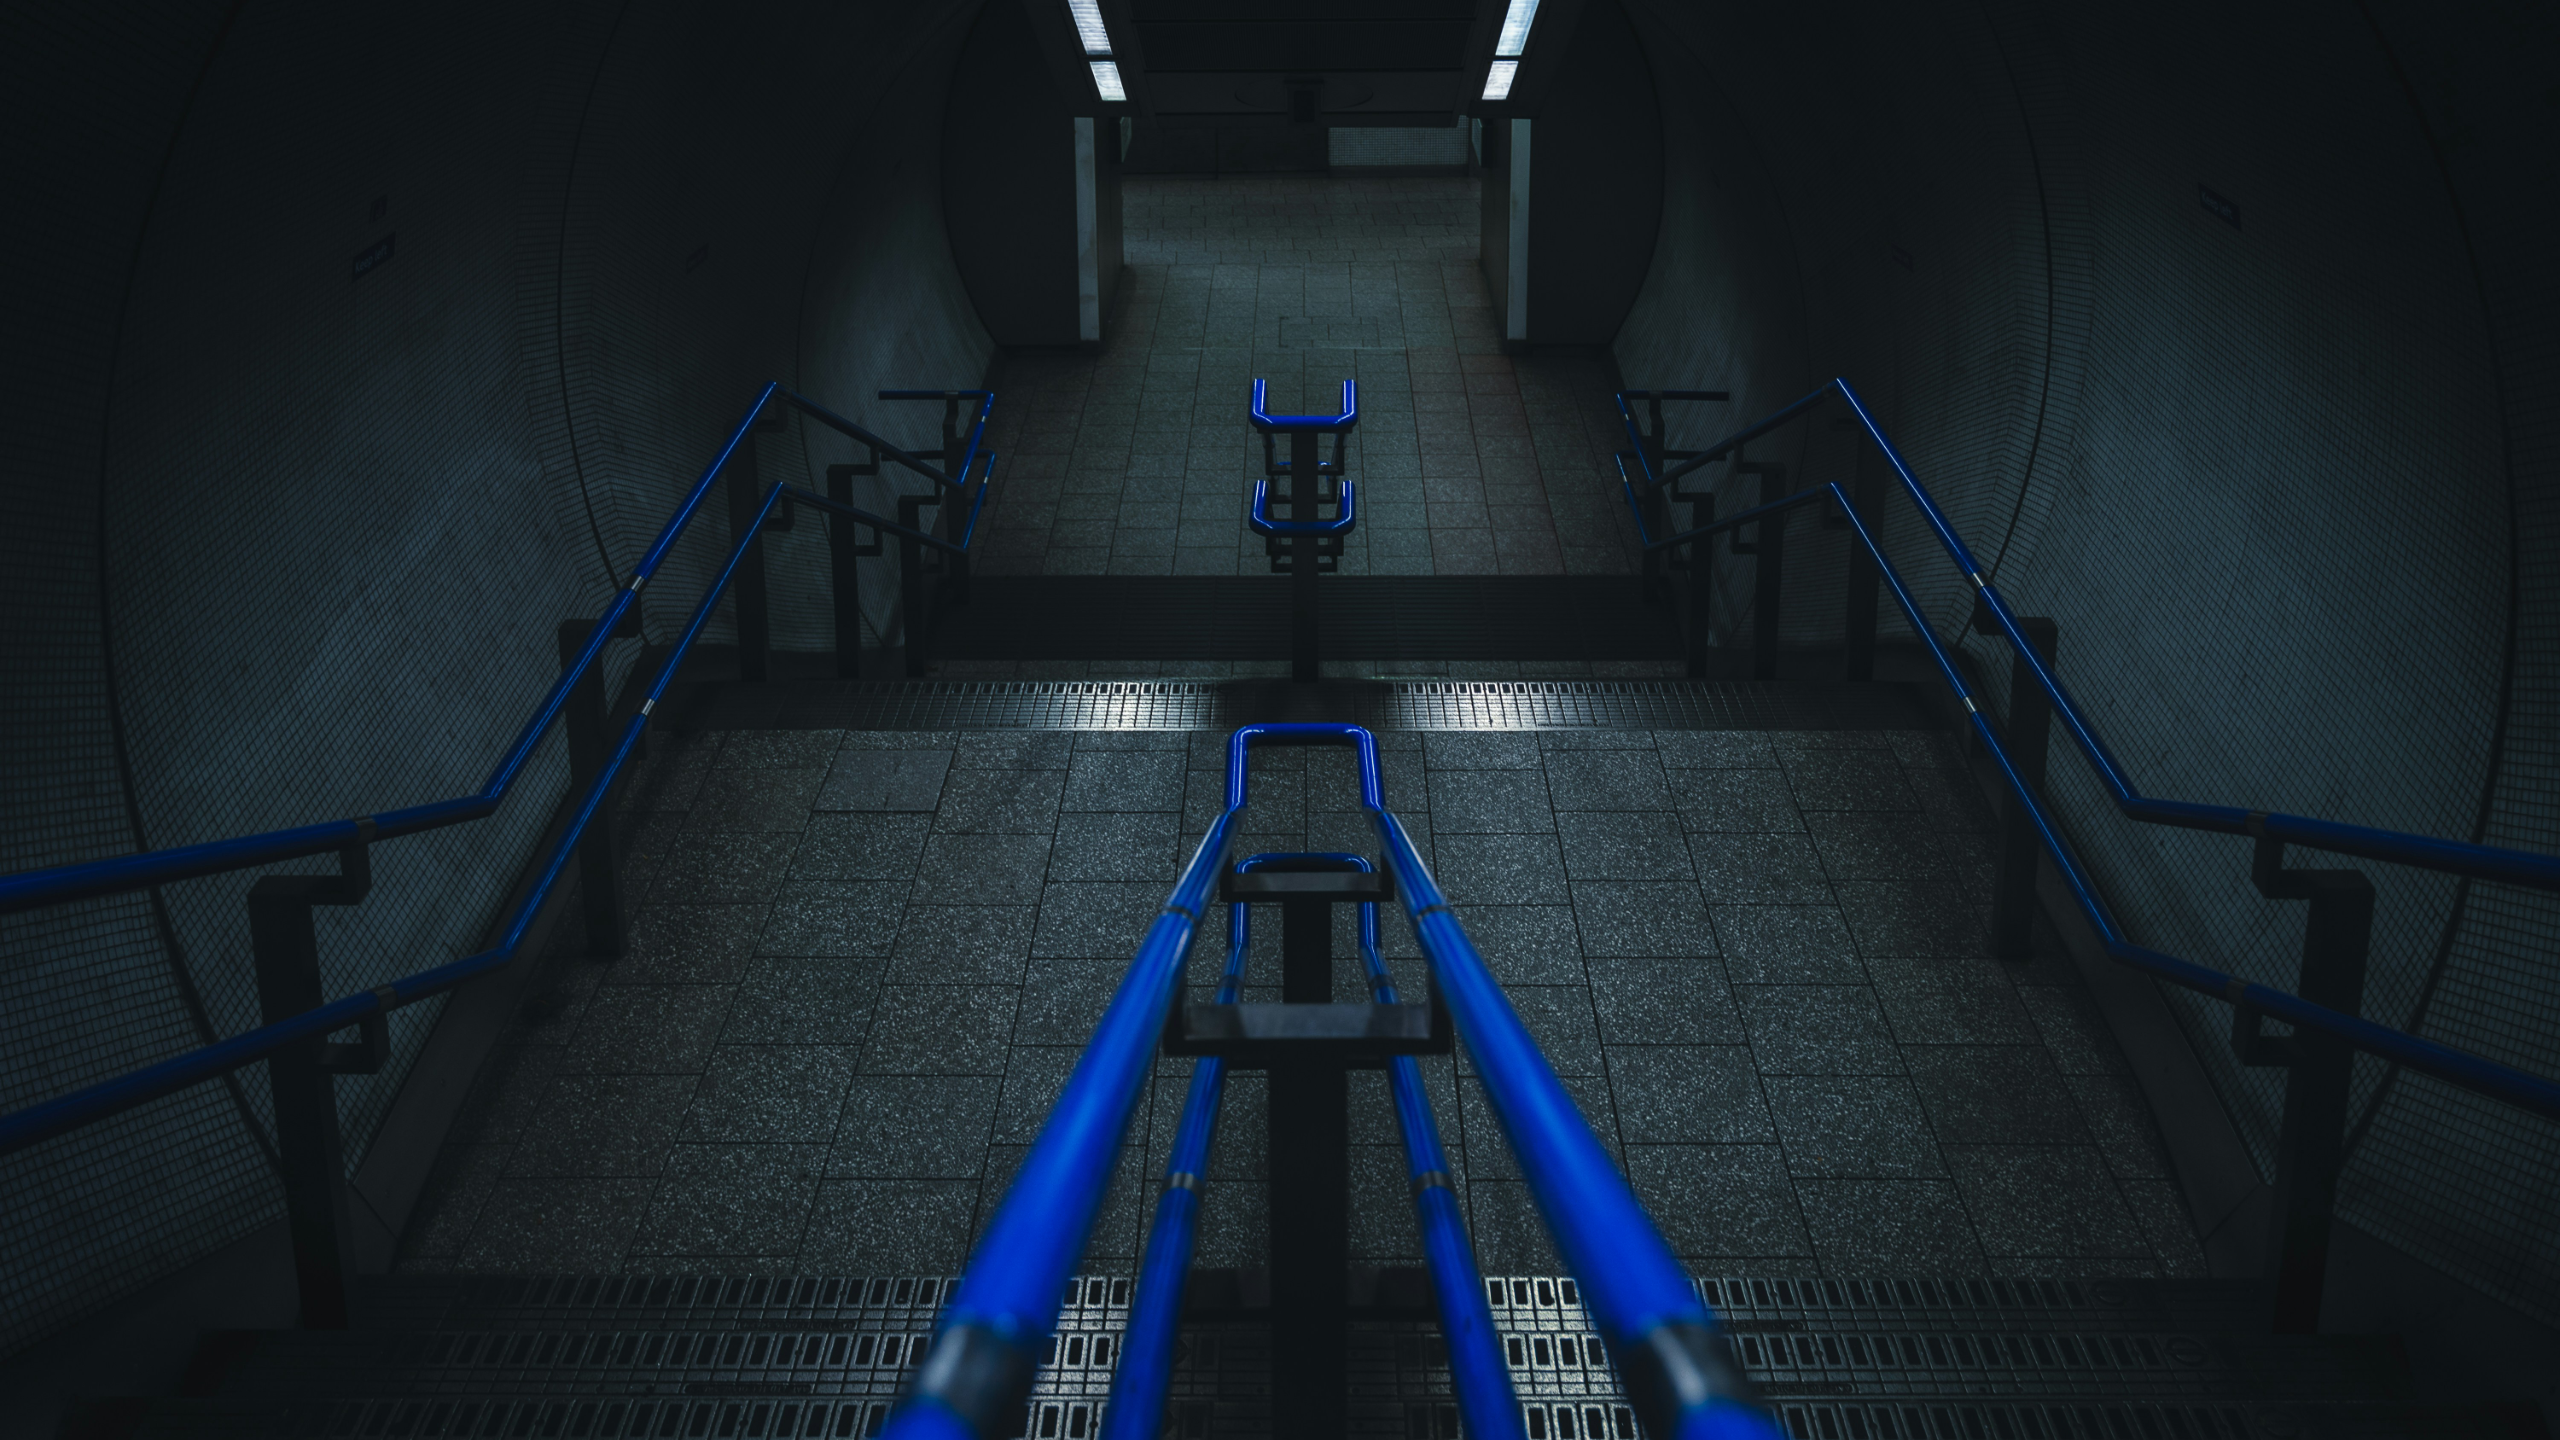 Steps Dark Station Underground Blue Lights Railing Empty Handrail London UK 2560x1440